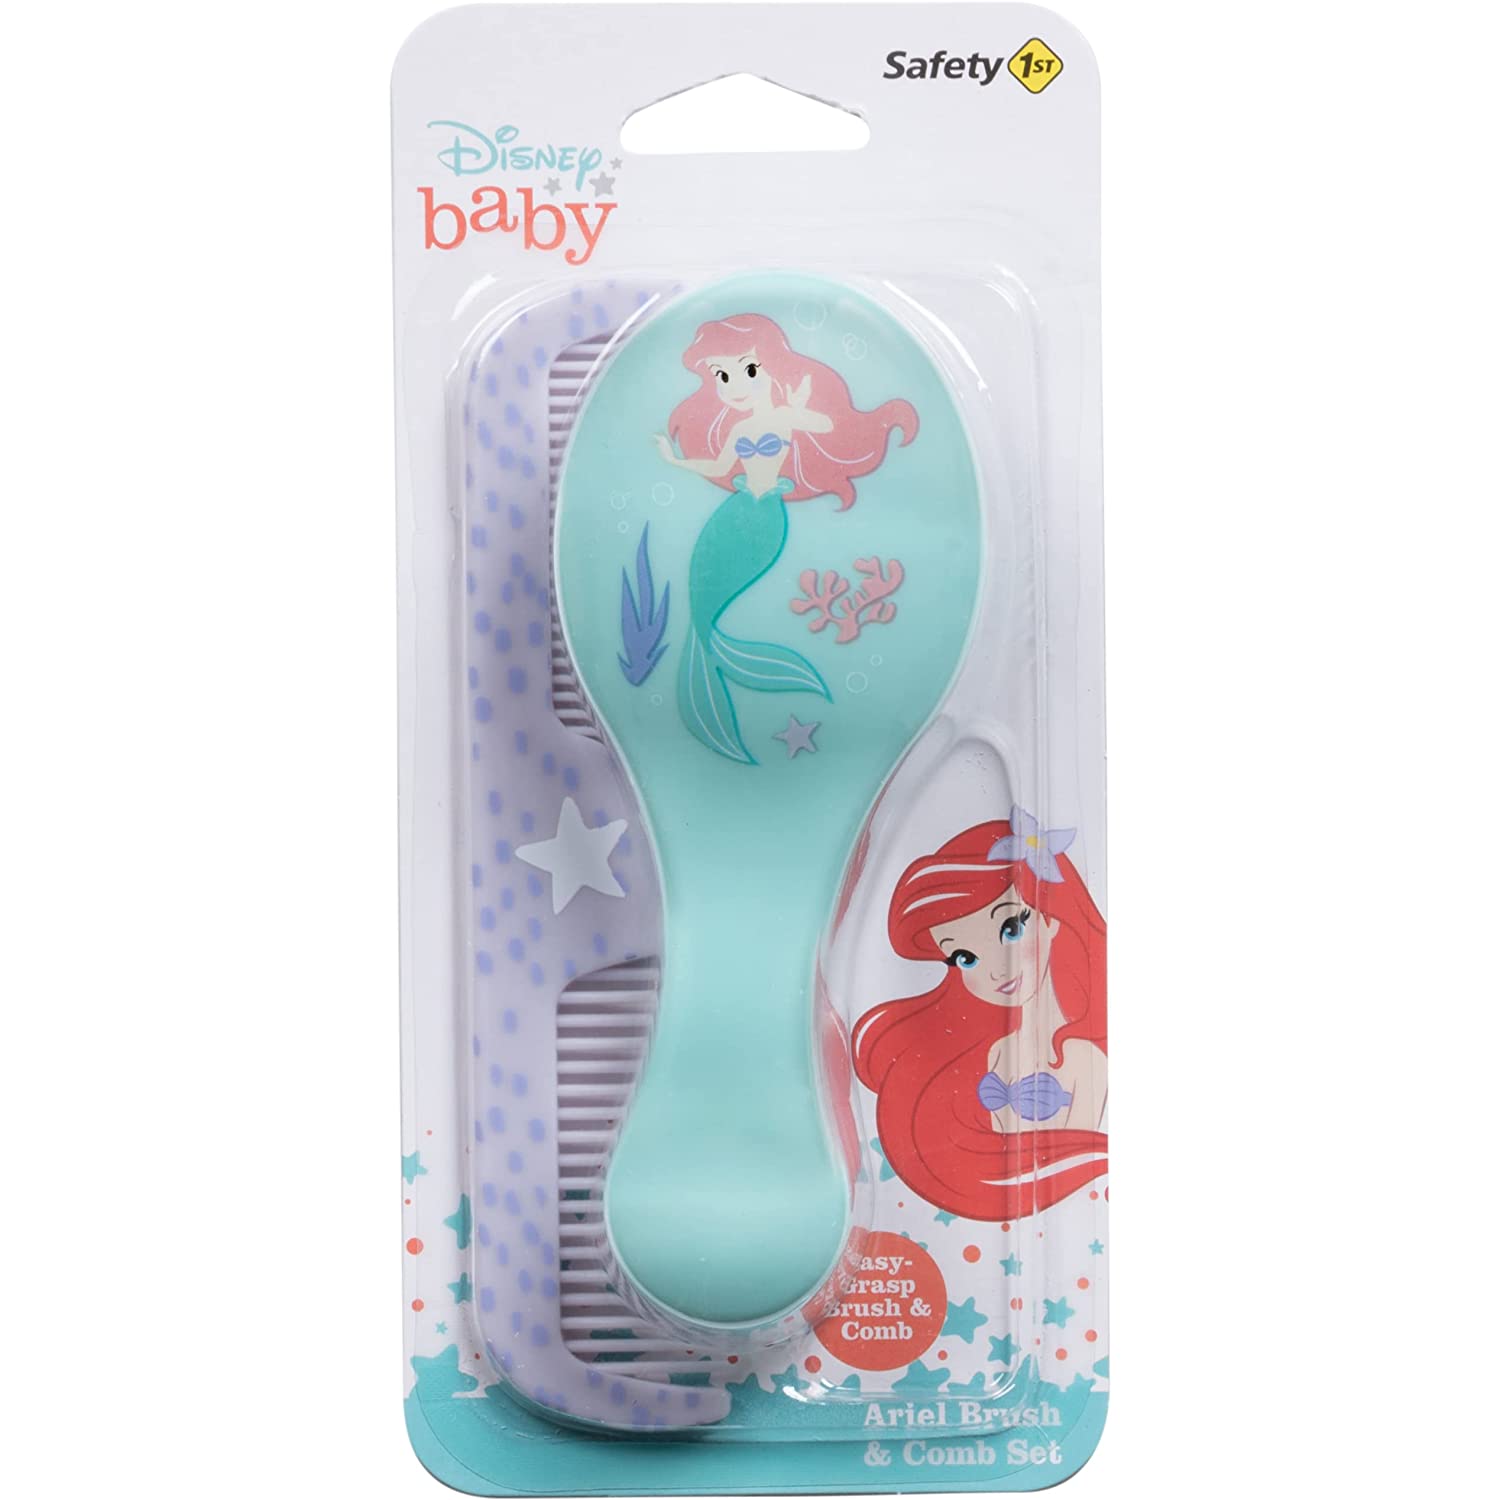 Disney Baby Brush & Comb Set, Ariel Color - With Easy Grip Handles